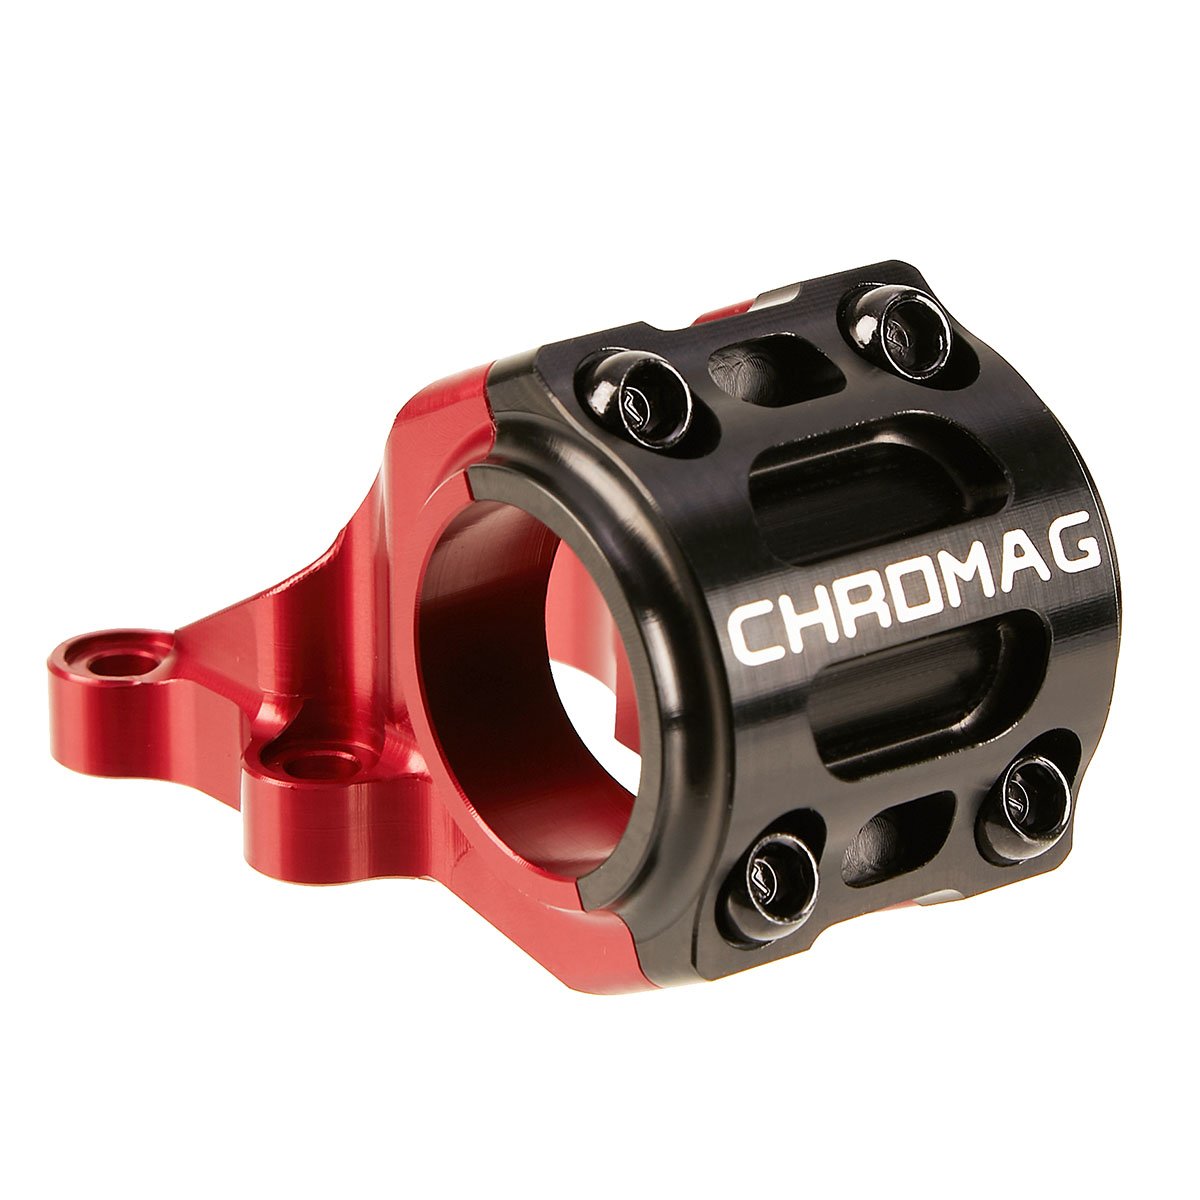 Chromag Potence VTT Director Direct Mount Rouge, 31.8 mm, 47 mm Reach